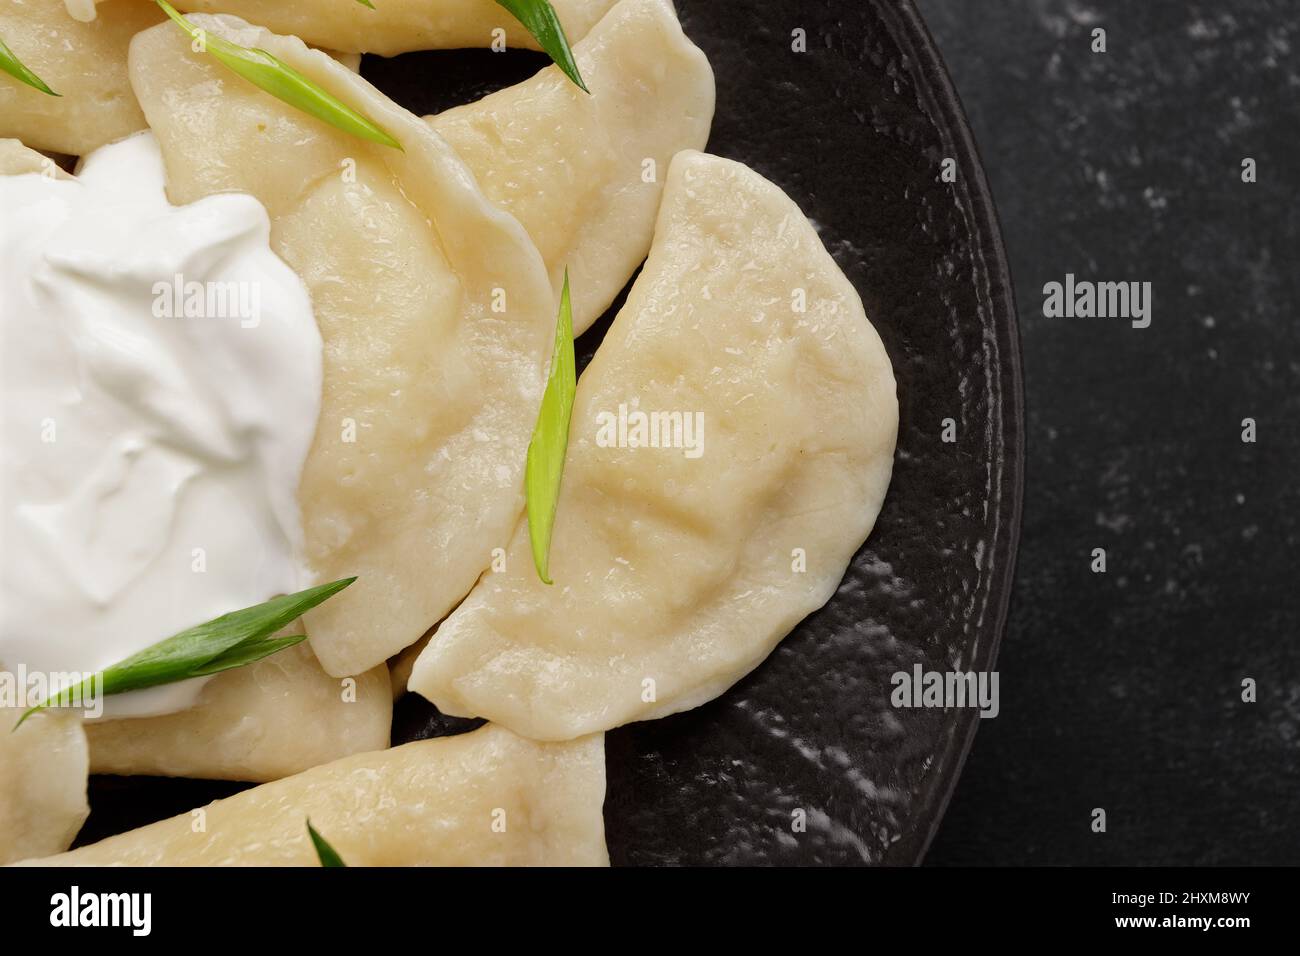 Boiled Ukrainian dumplings on a dark background Stock Photo